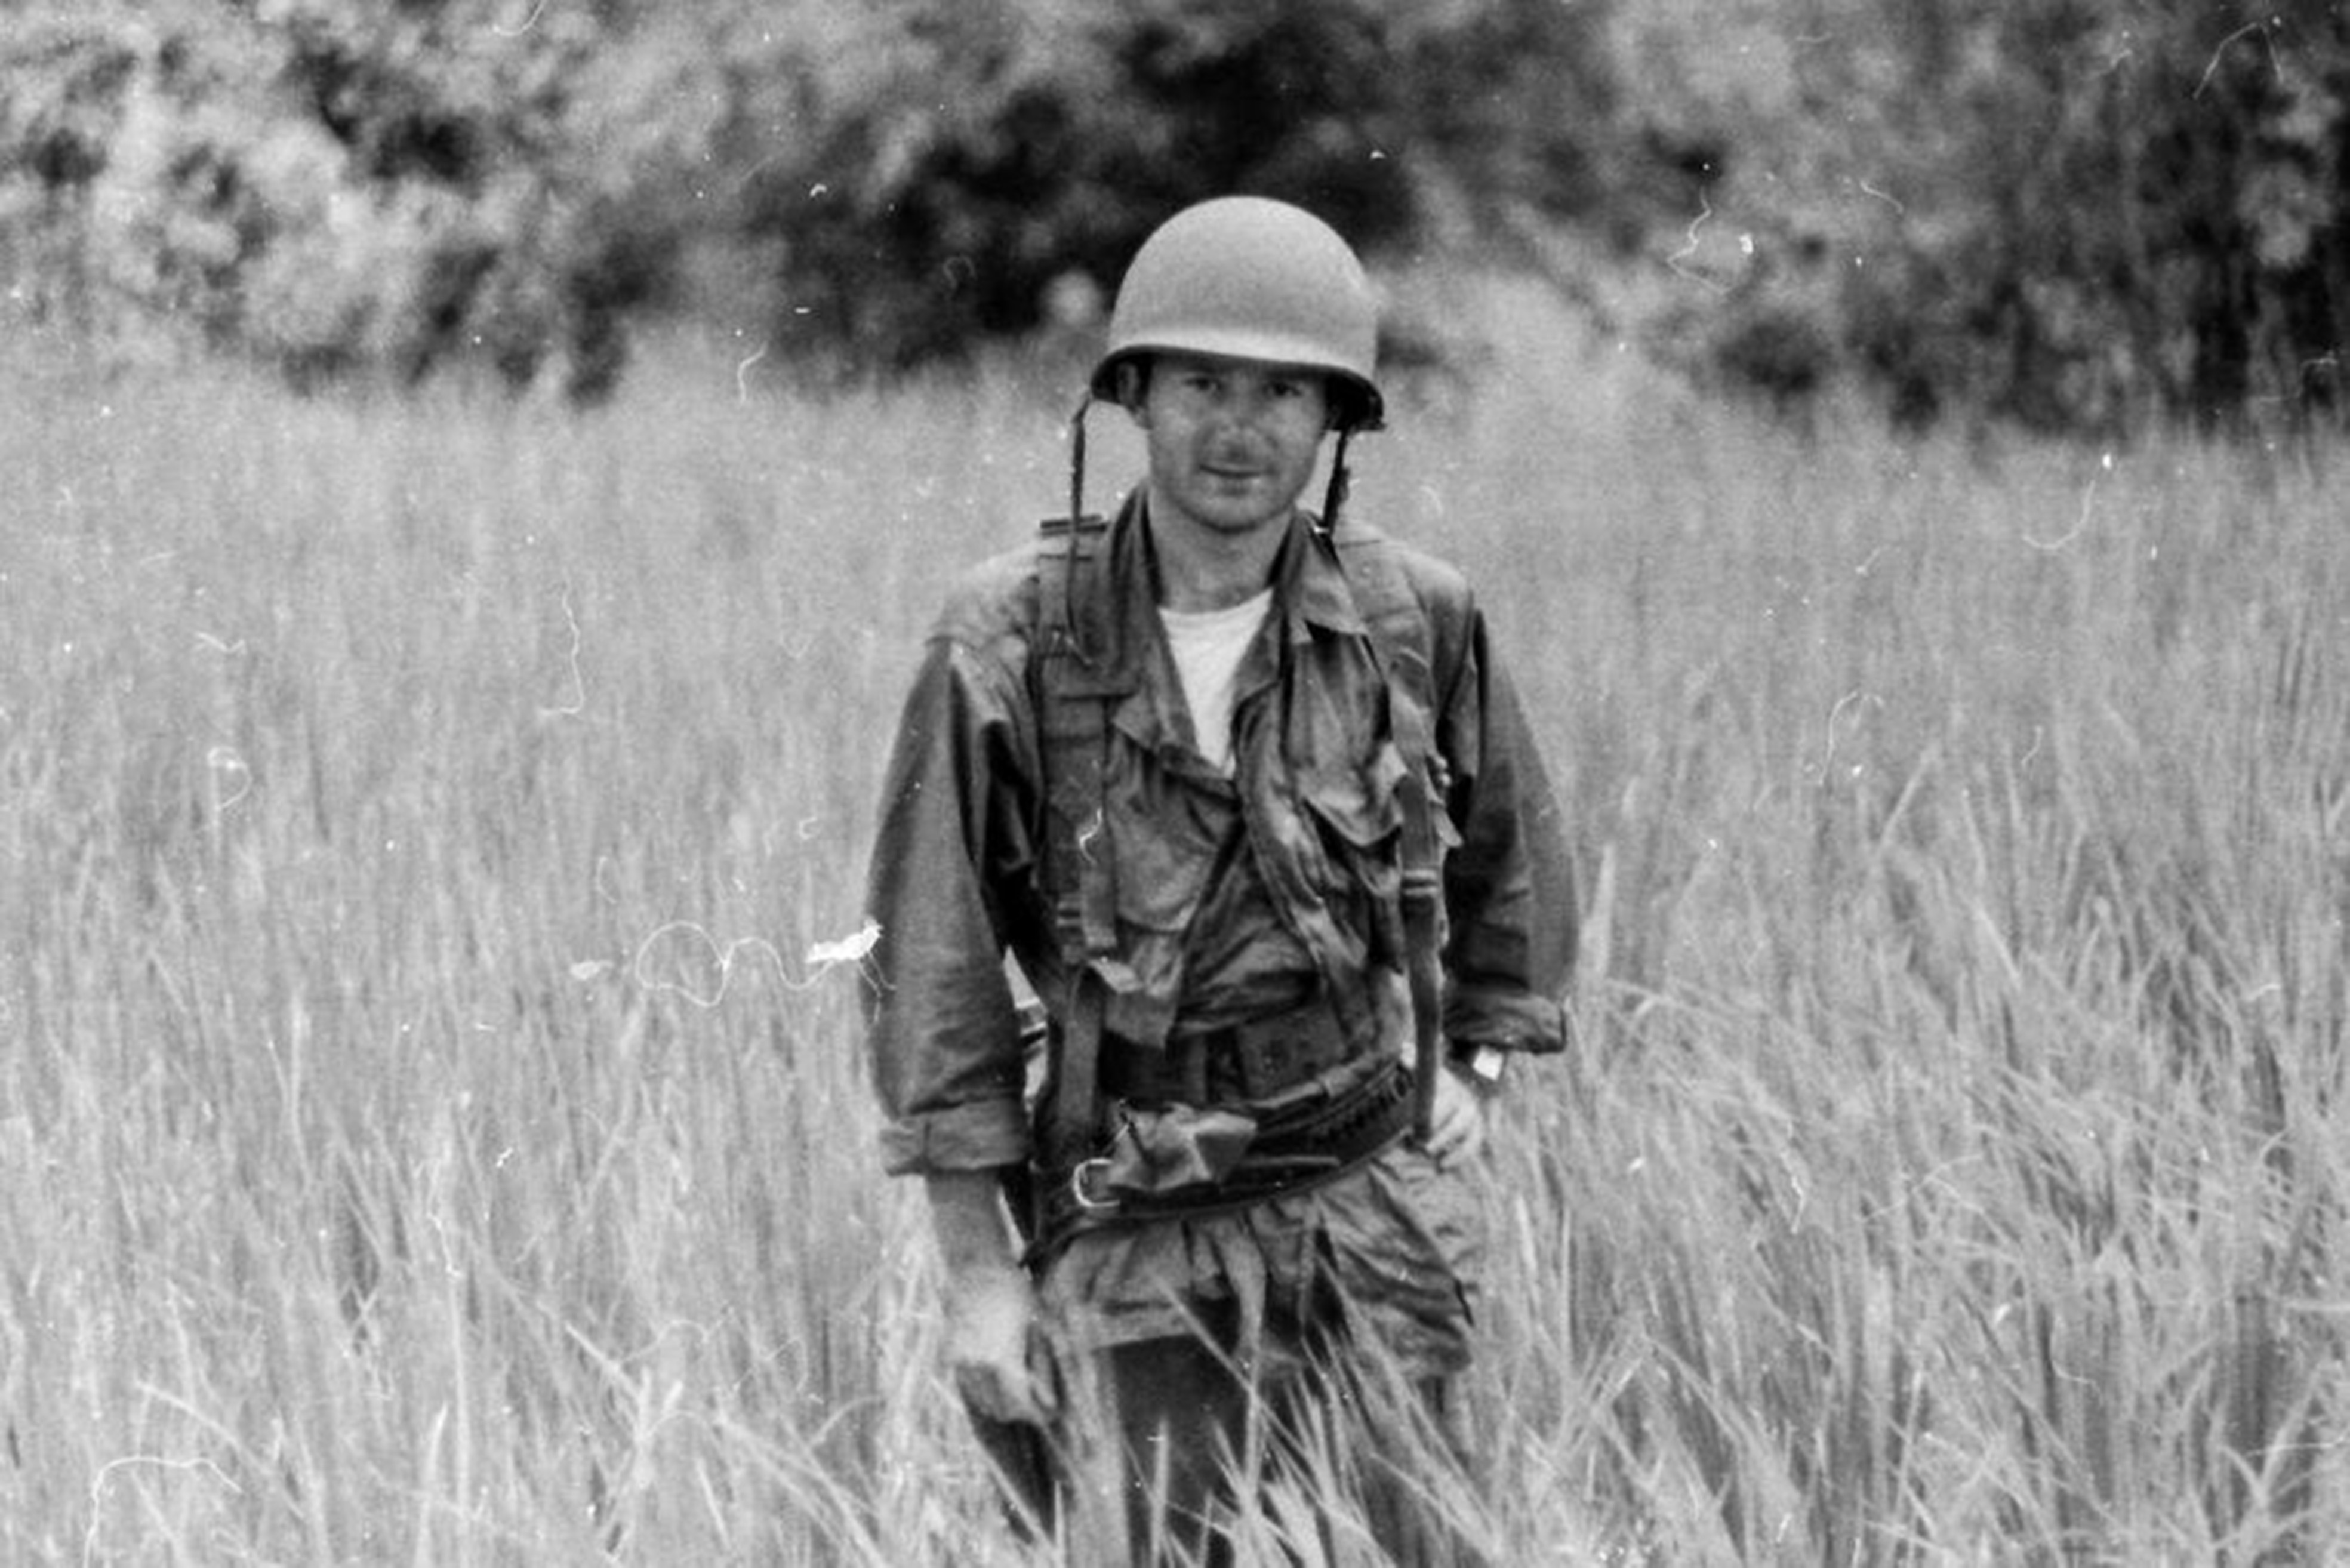 Derek Maitland was 24 when he began reporting from the Vietnam War. Picture: Derek Maitland